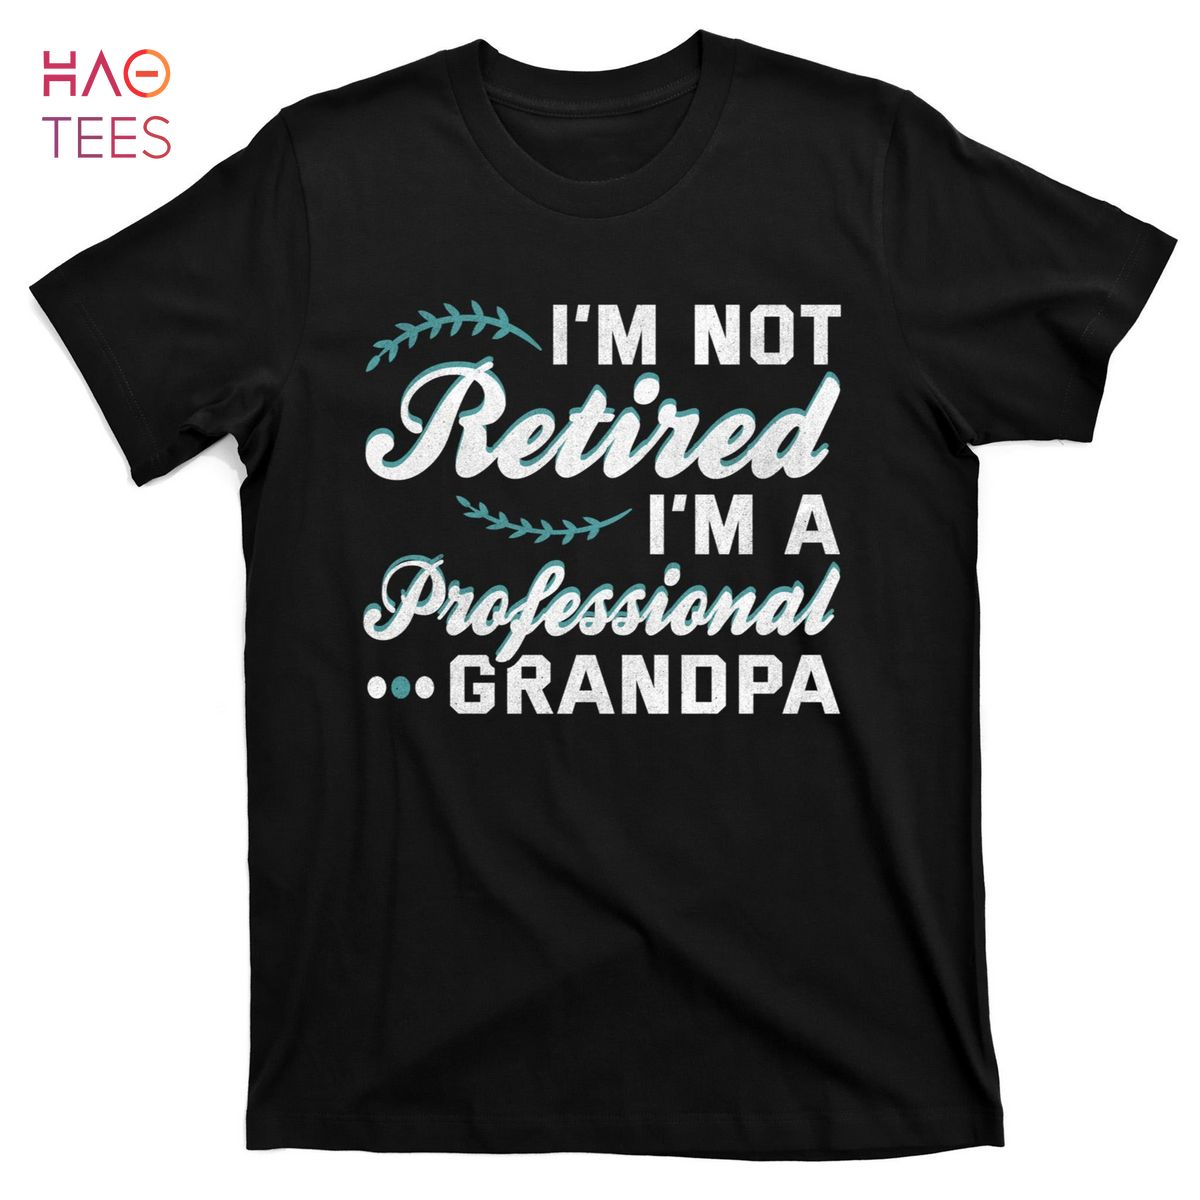 HOT Grandpa Shirts Funny Fathers Day Retired Grandpa Long Sleeve TShirt T-Shirts